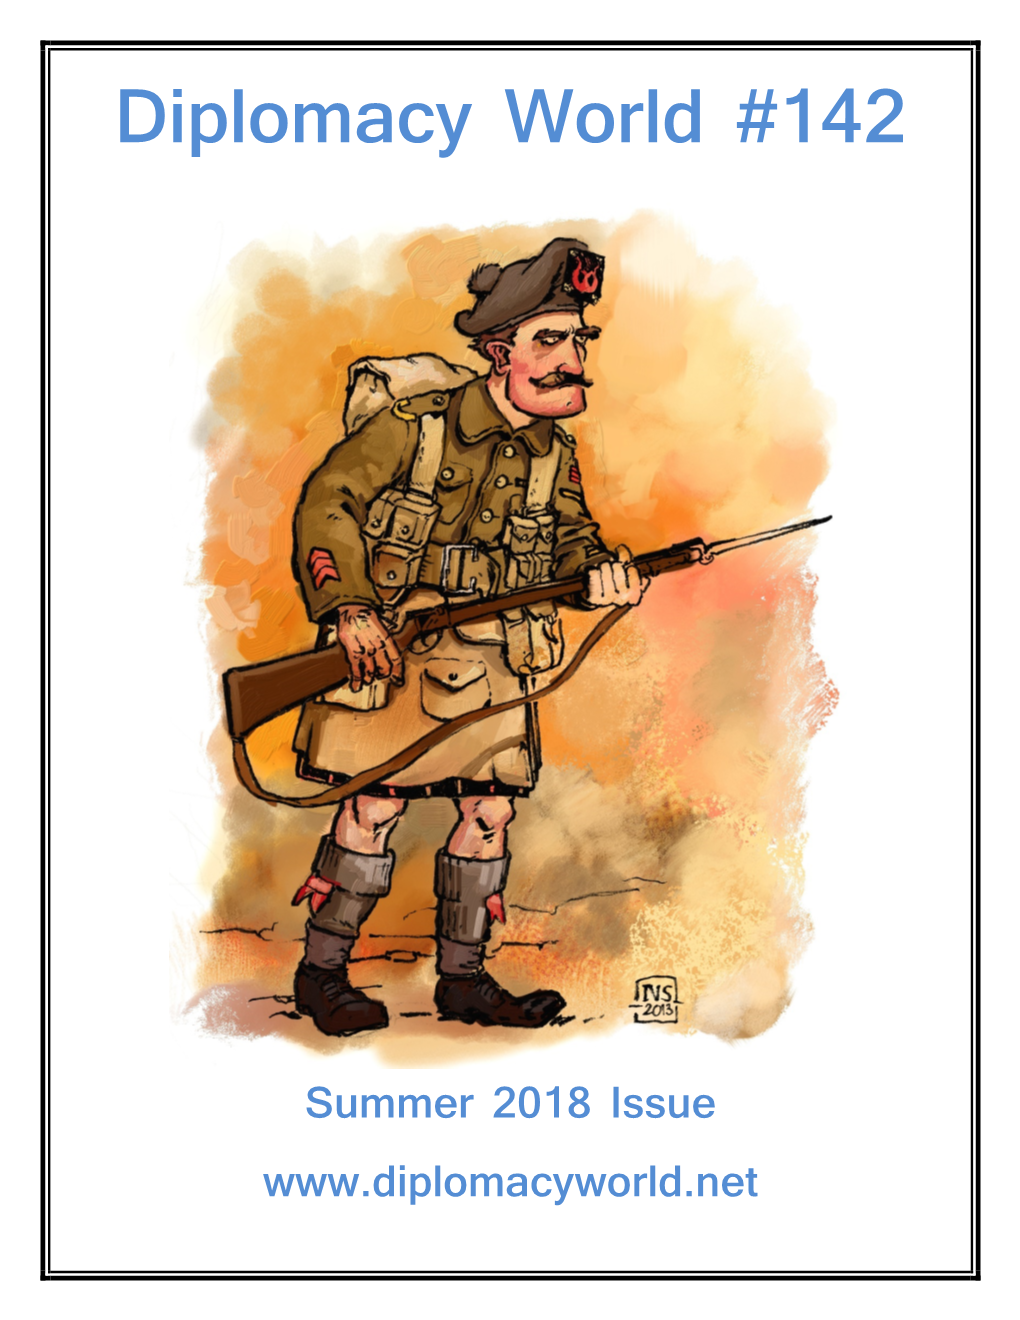 Diplomacy World #142, Summer 2018 Issue